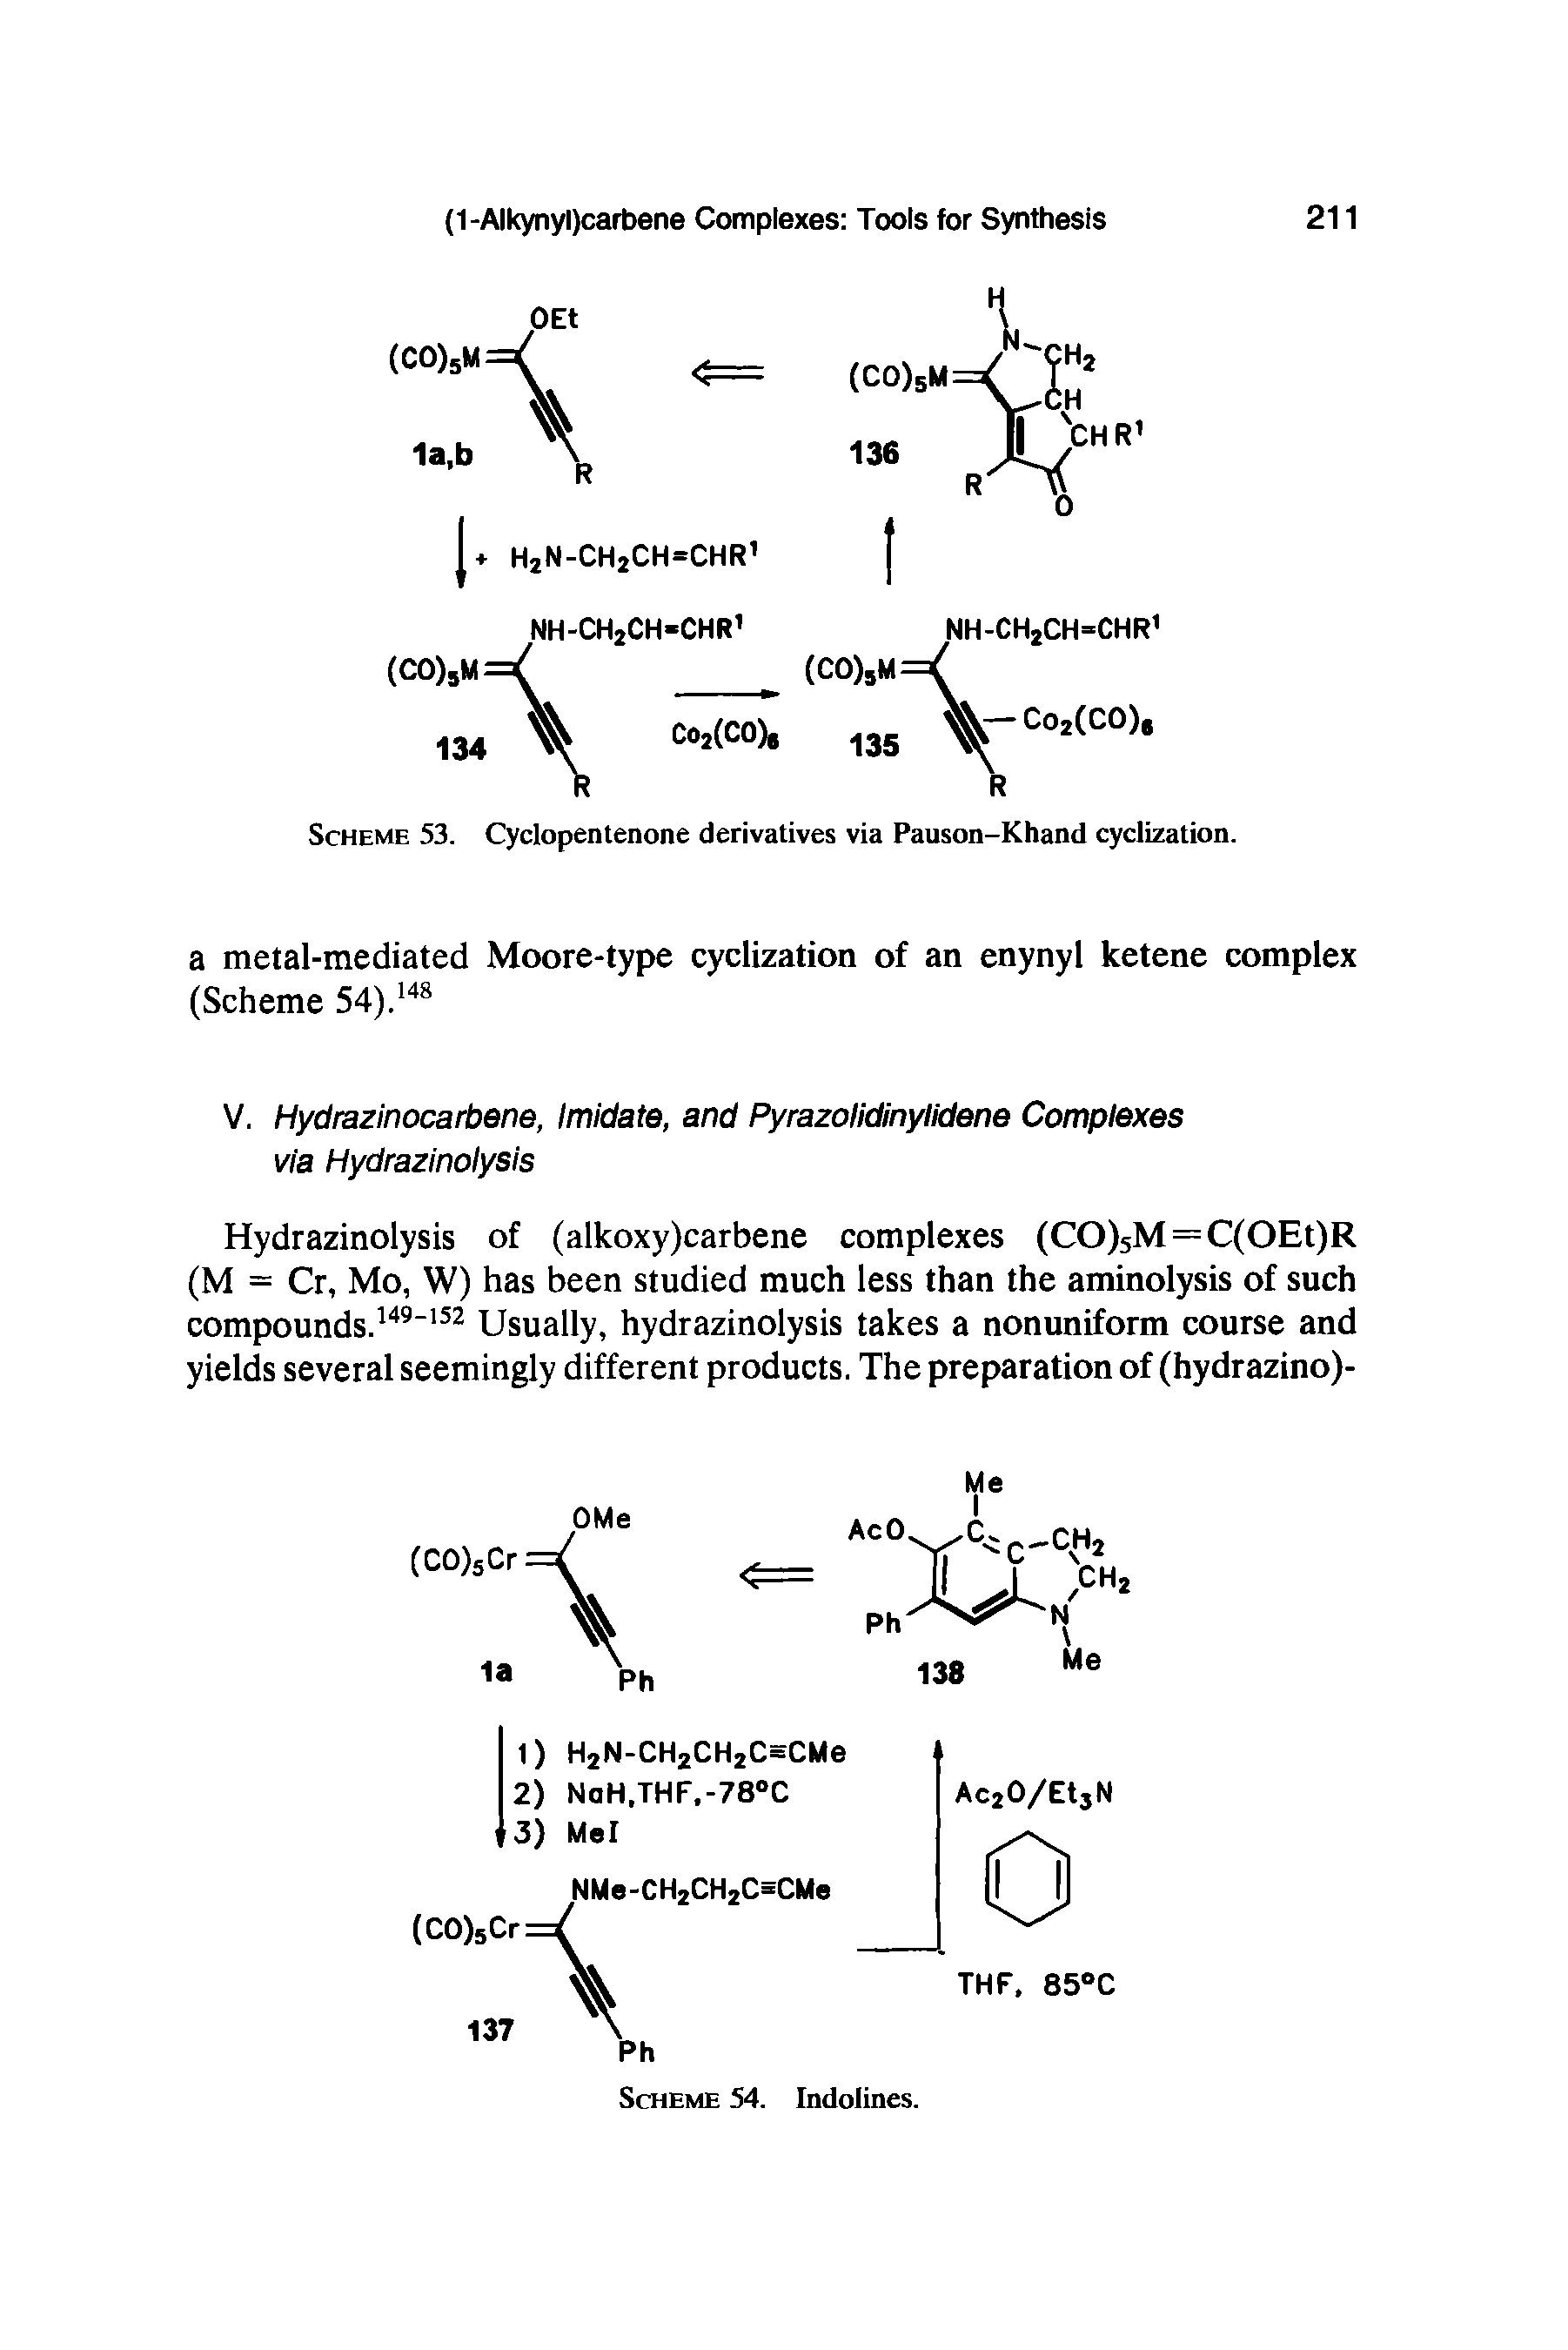 Scheme 53. Cyclopentenone derivatives via Pauson-Khand cyclization.